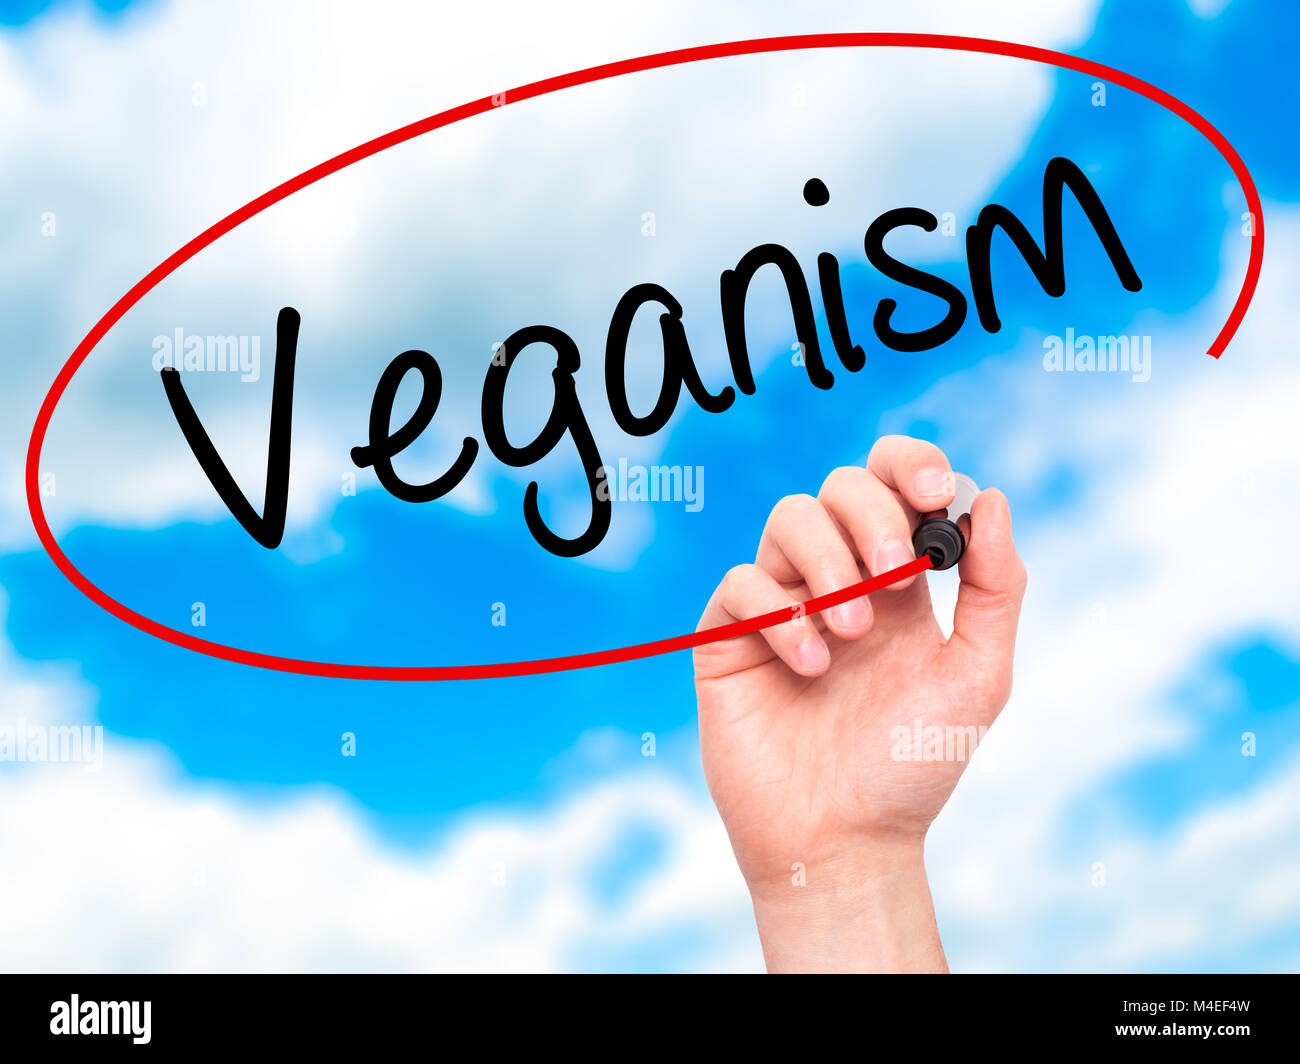 Man Hand writing Veganism with black marker on visual screen Stock Photo